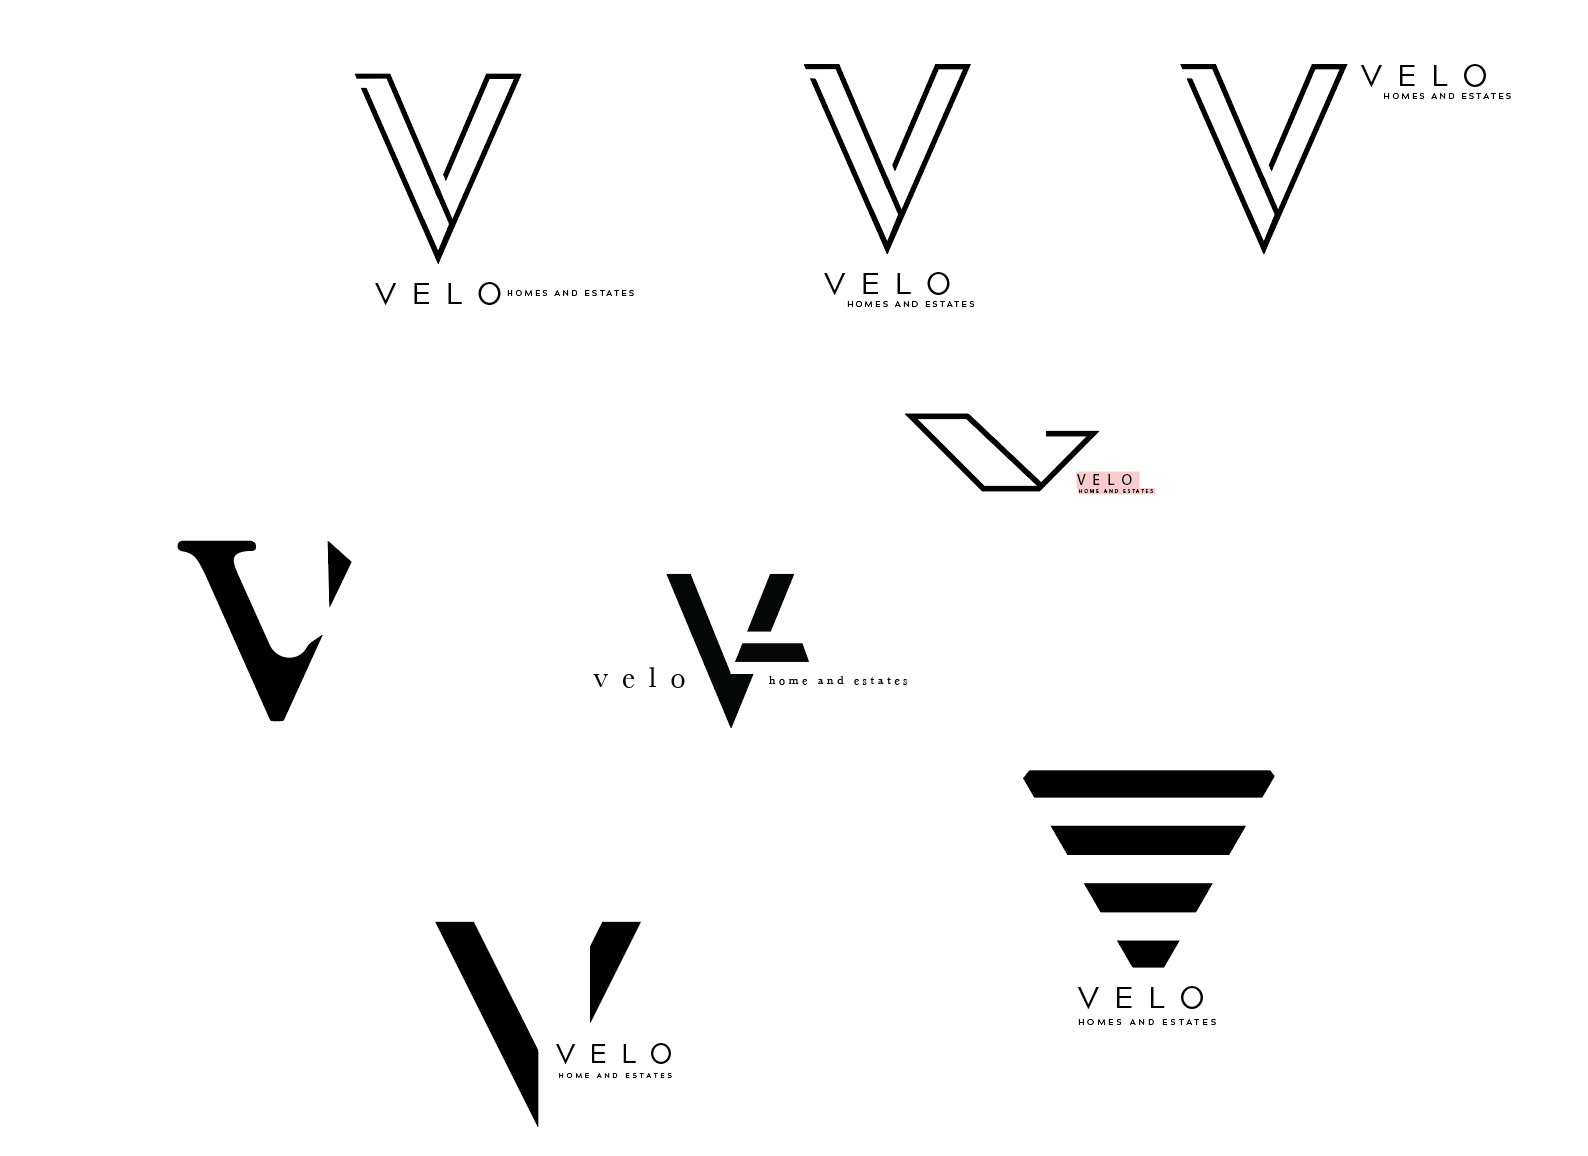 velo-logo-workspace-austin-belisle-2.png